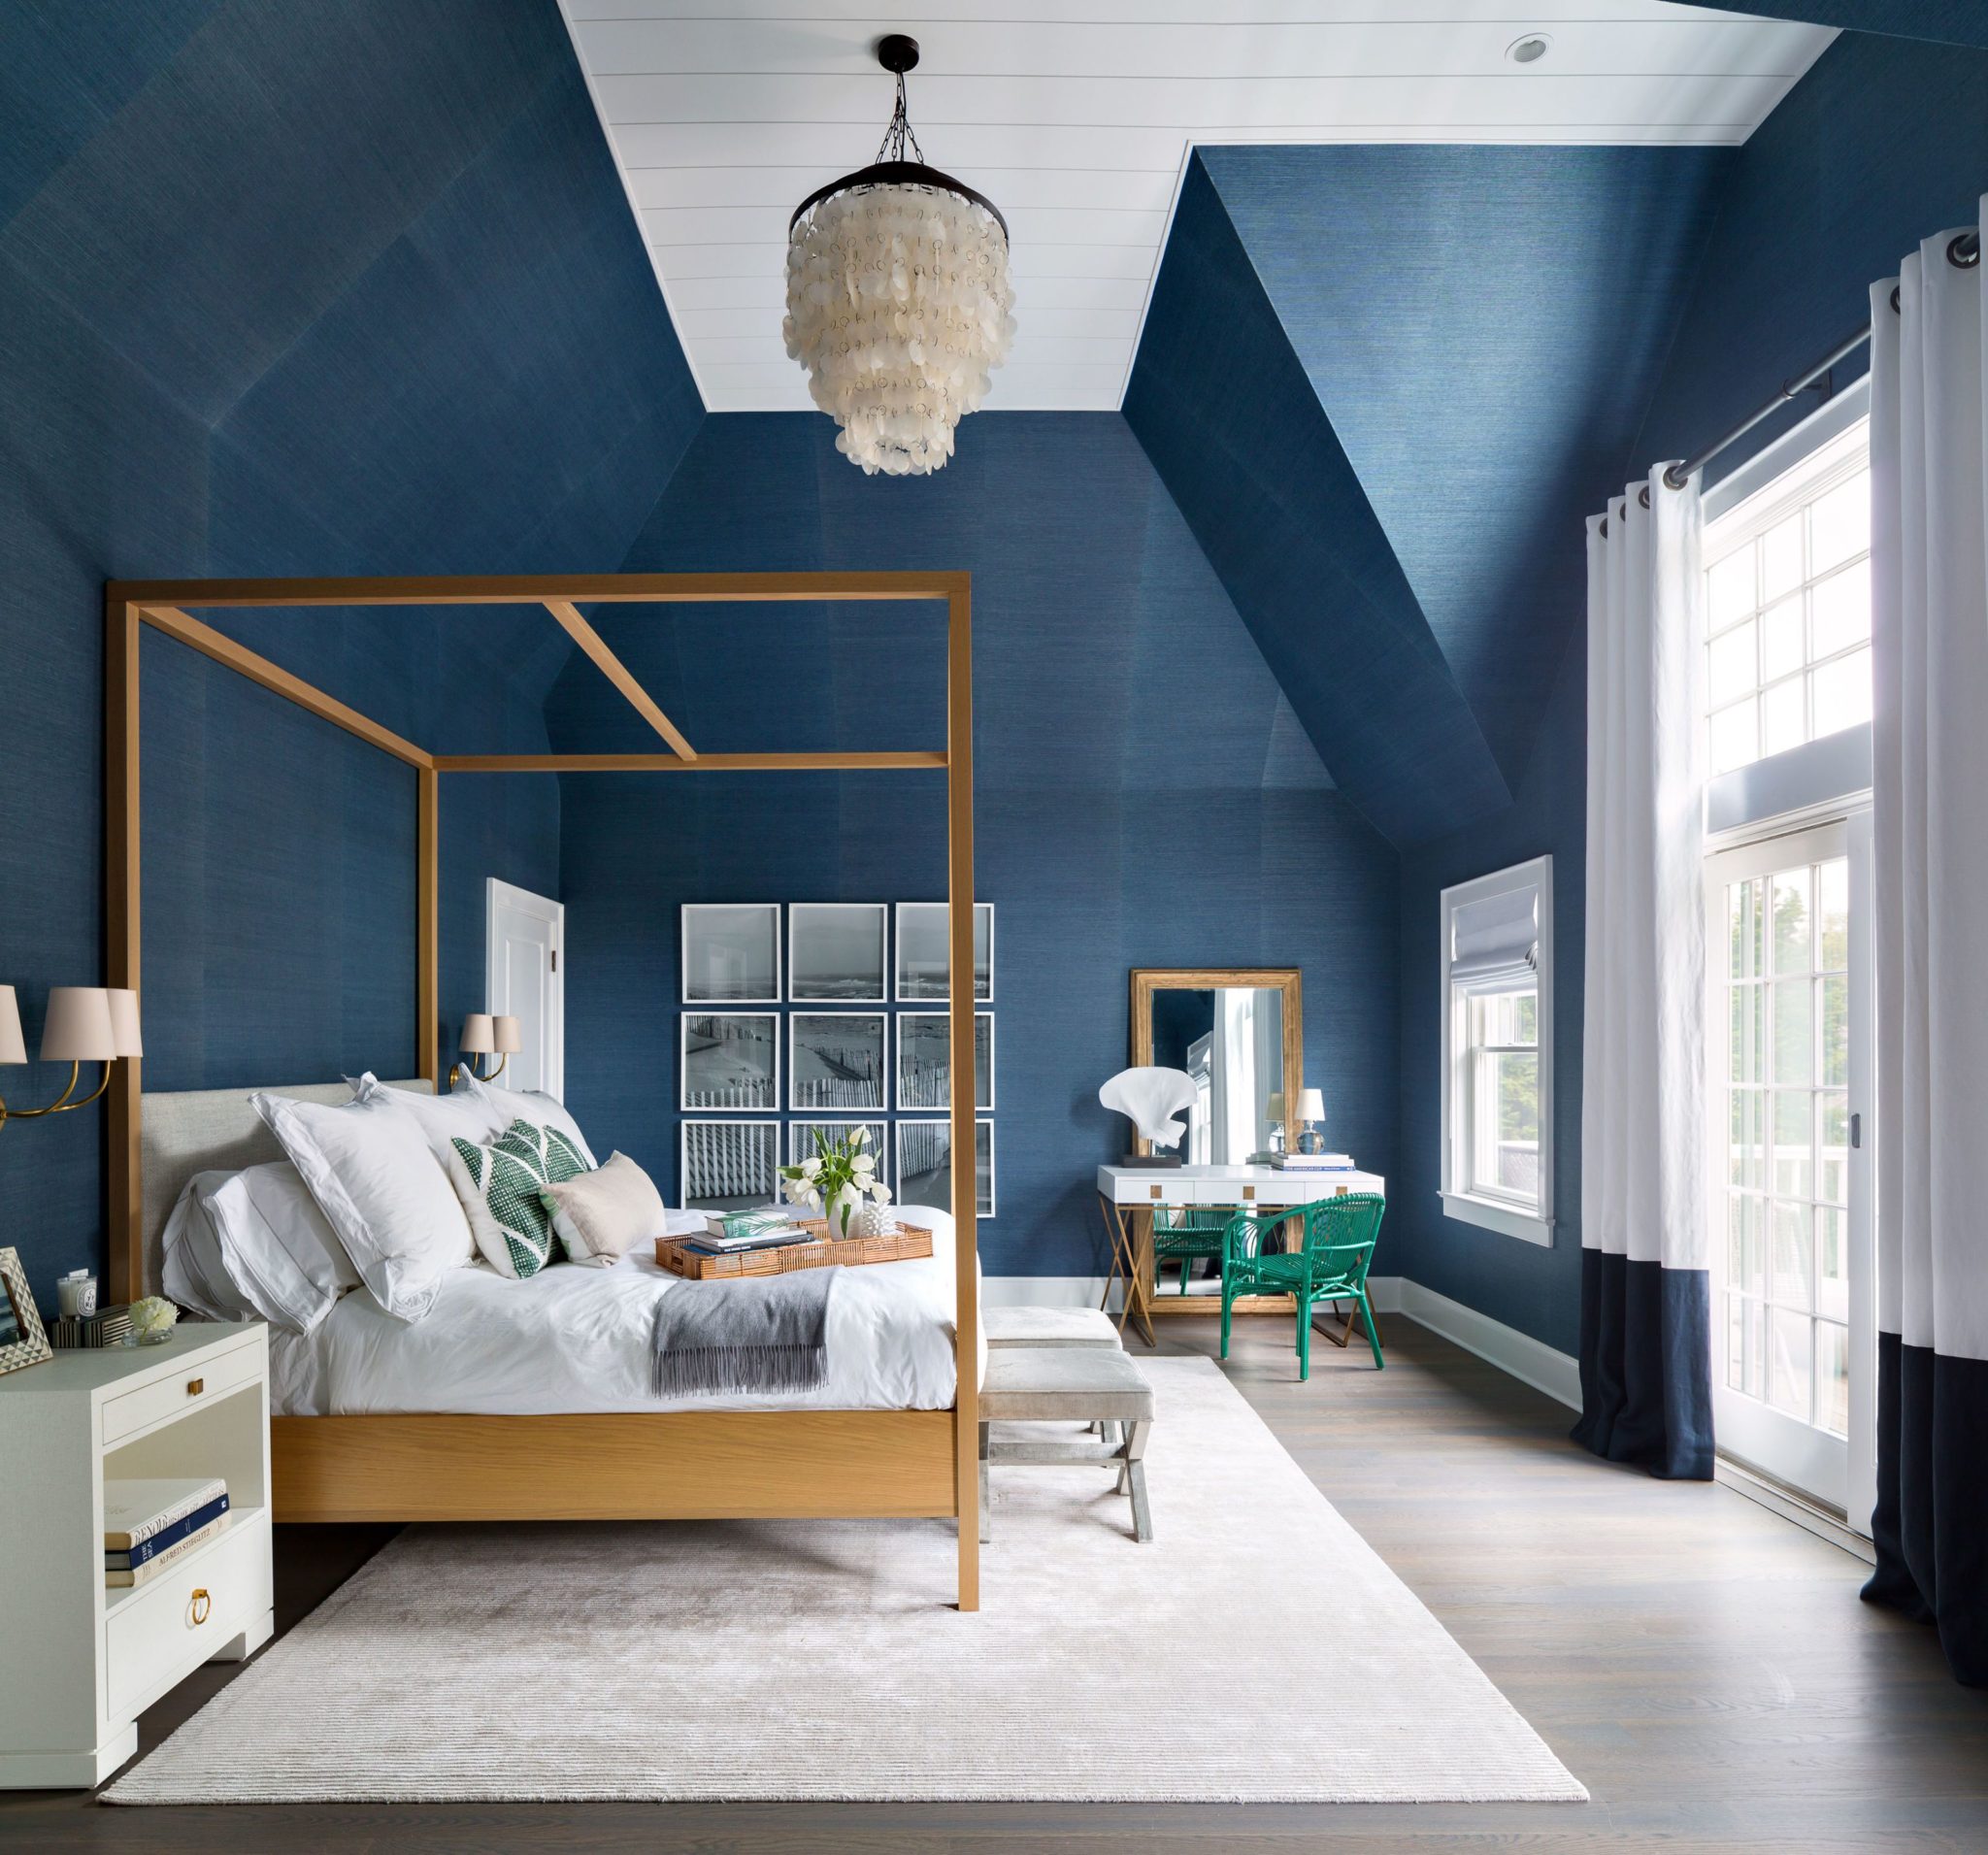 moody interior: breathtaking bedrooms in shades of blue